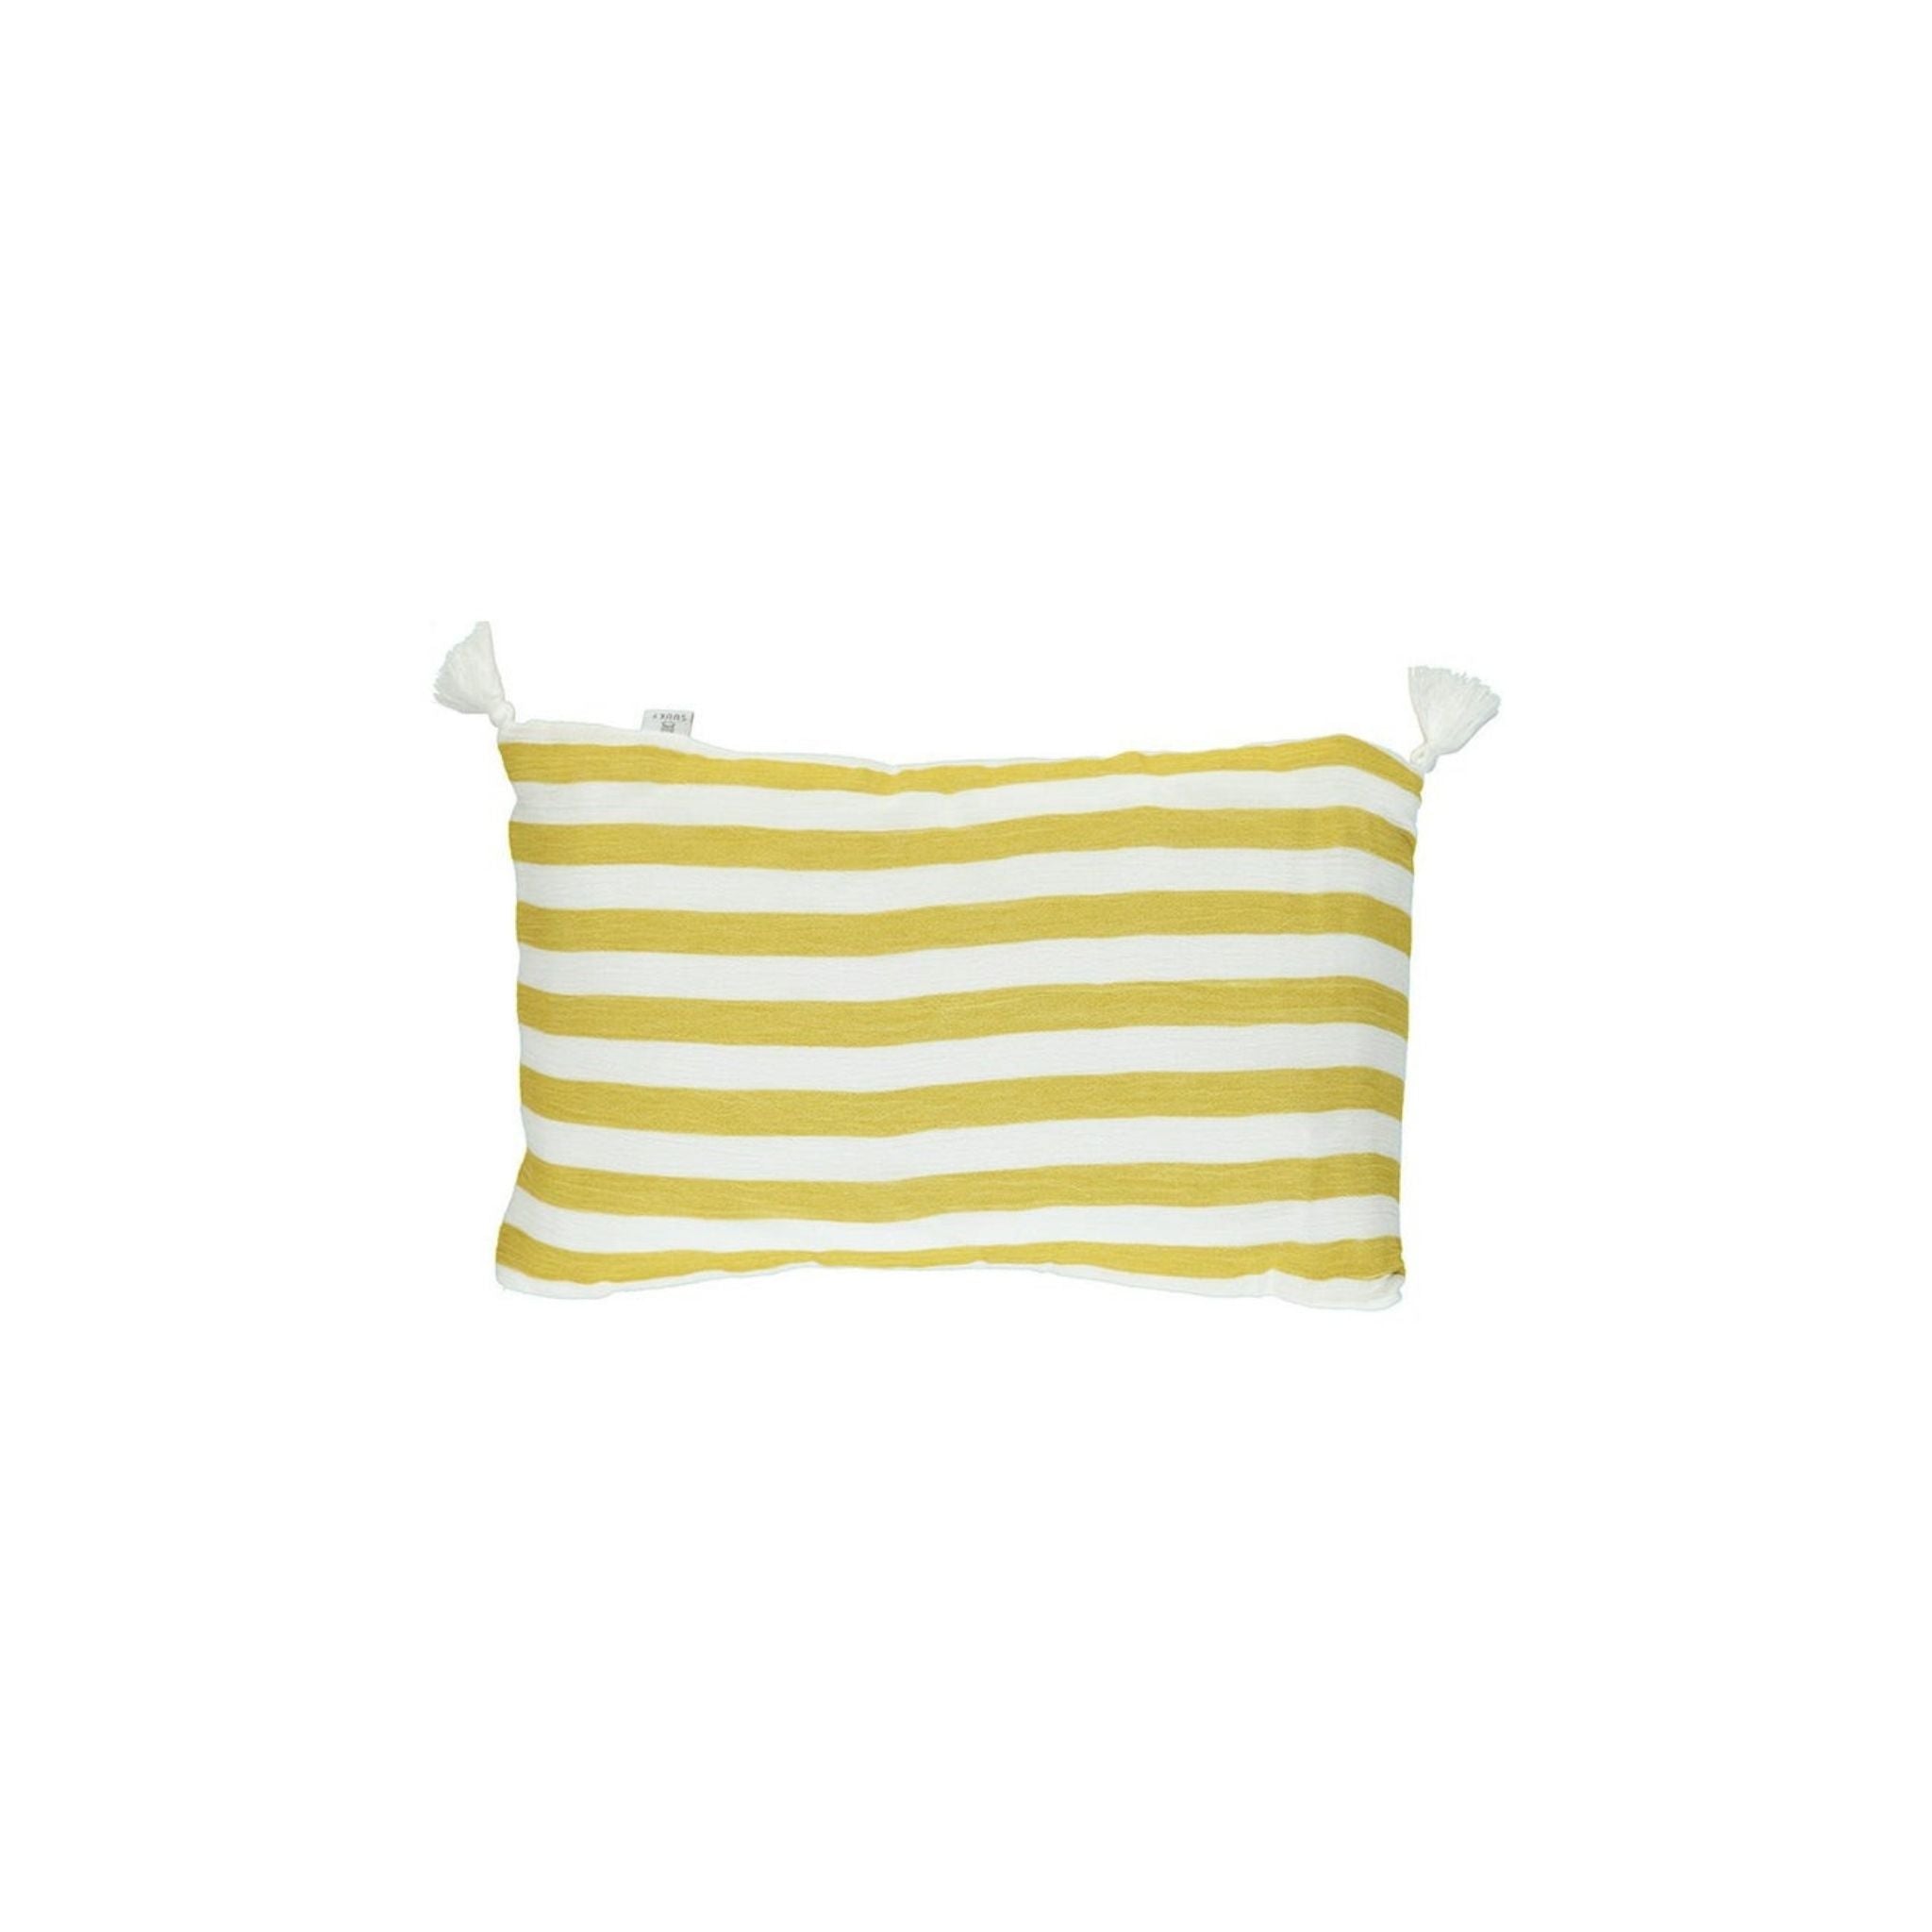 Suuky Striped Mini Pillow - Mustard